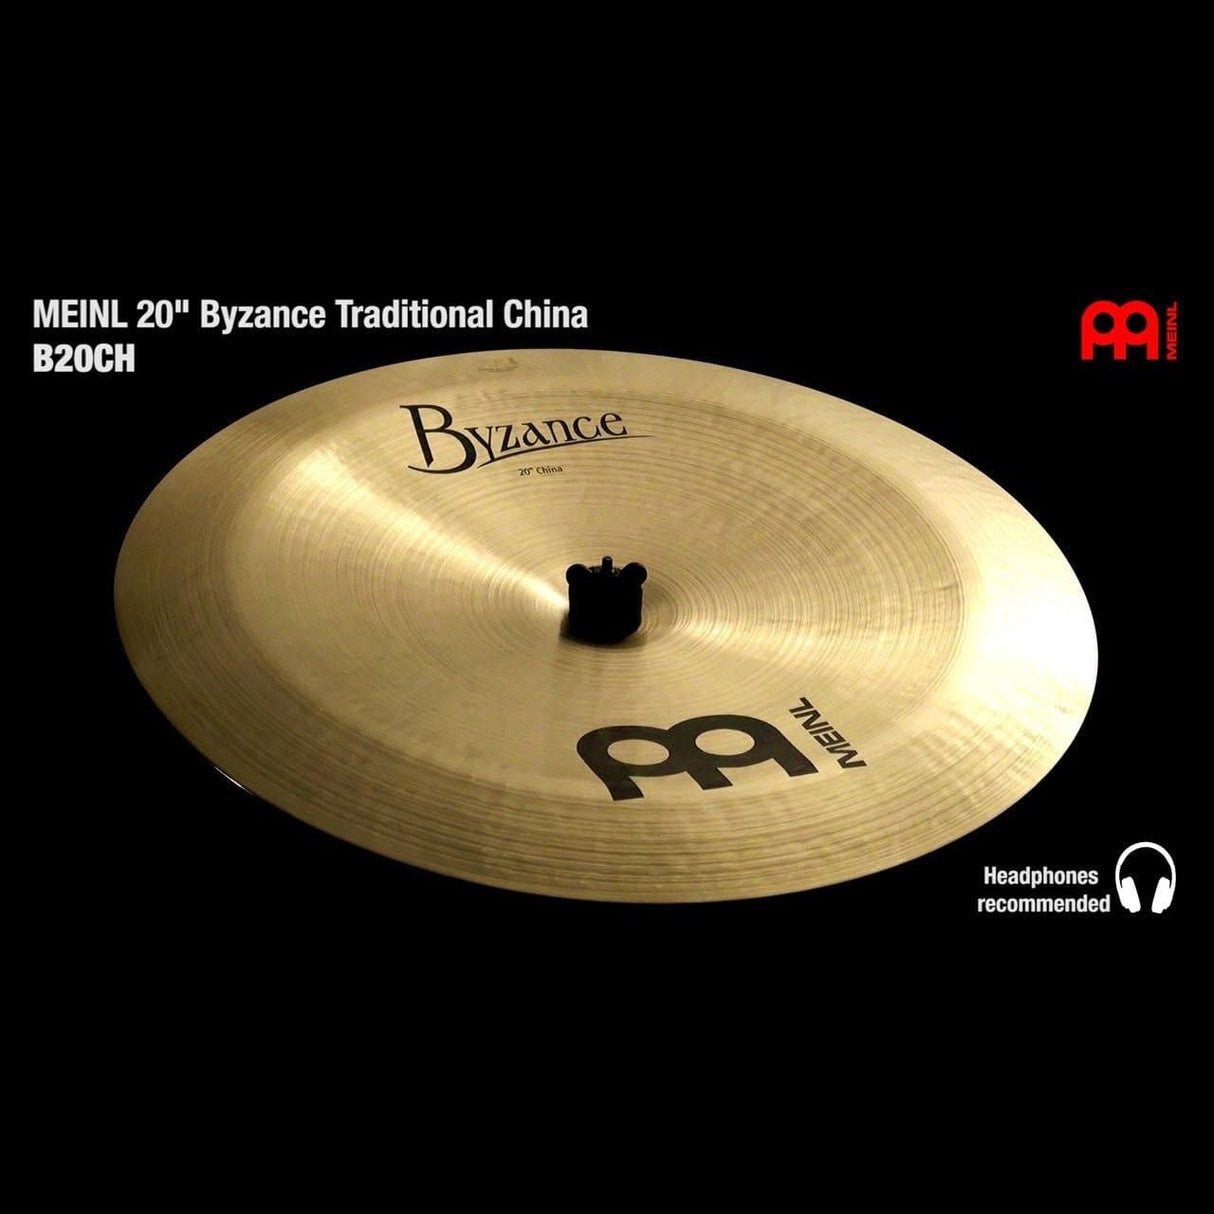 Meinl Byzance Traditional China Cymbal 20